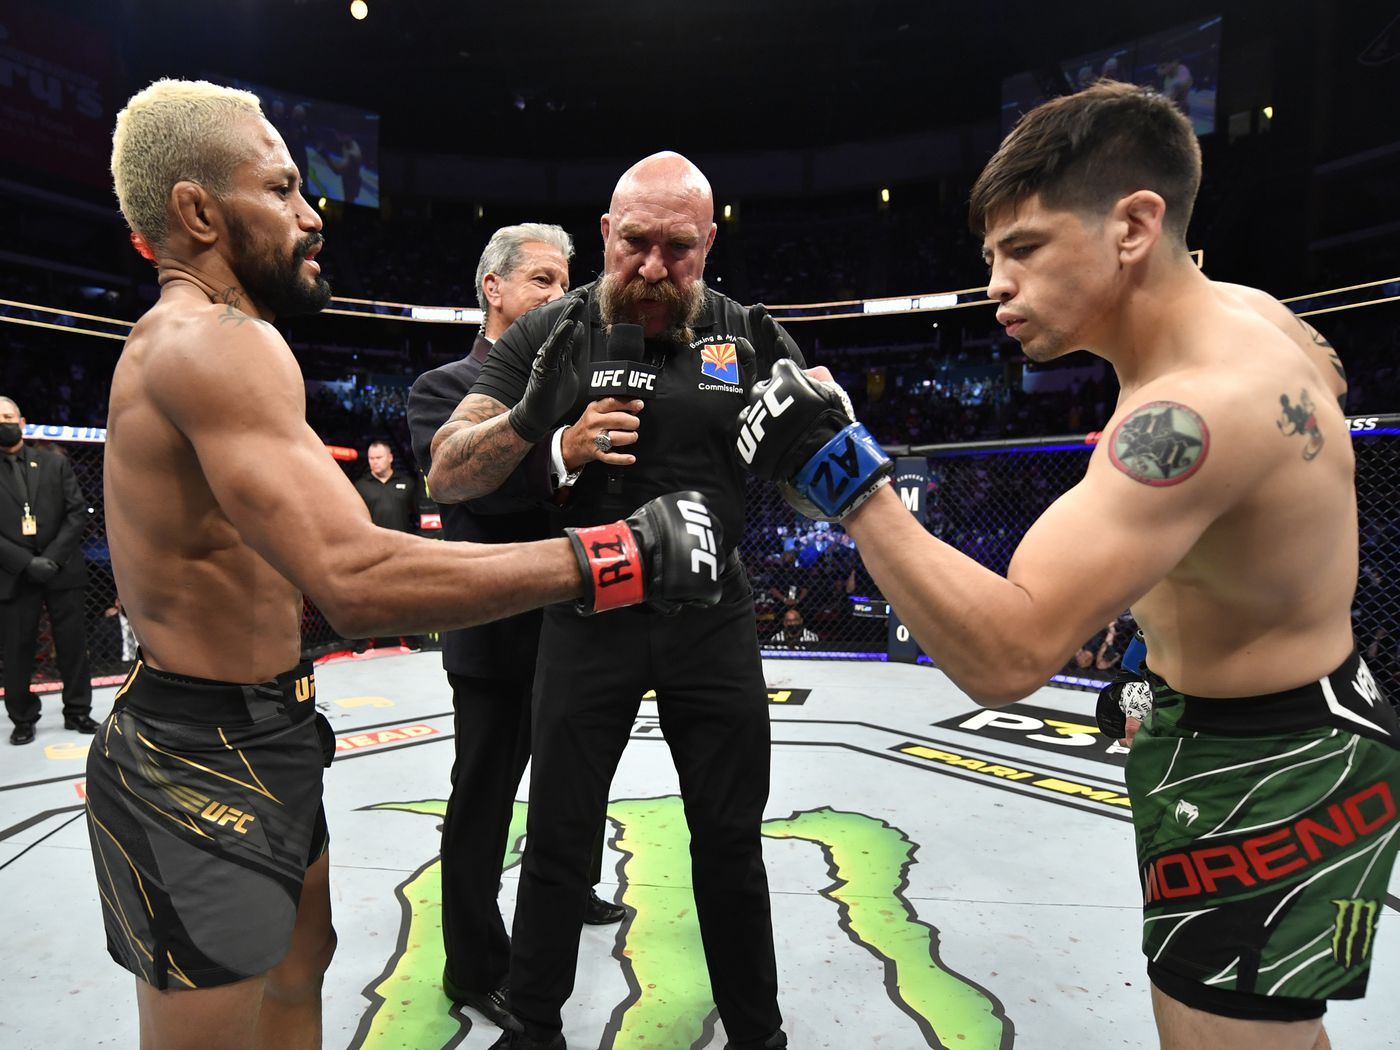 Brandon Moreno vs. Deiveson Figueiredo 3 official for UFC 270